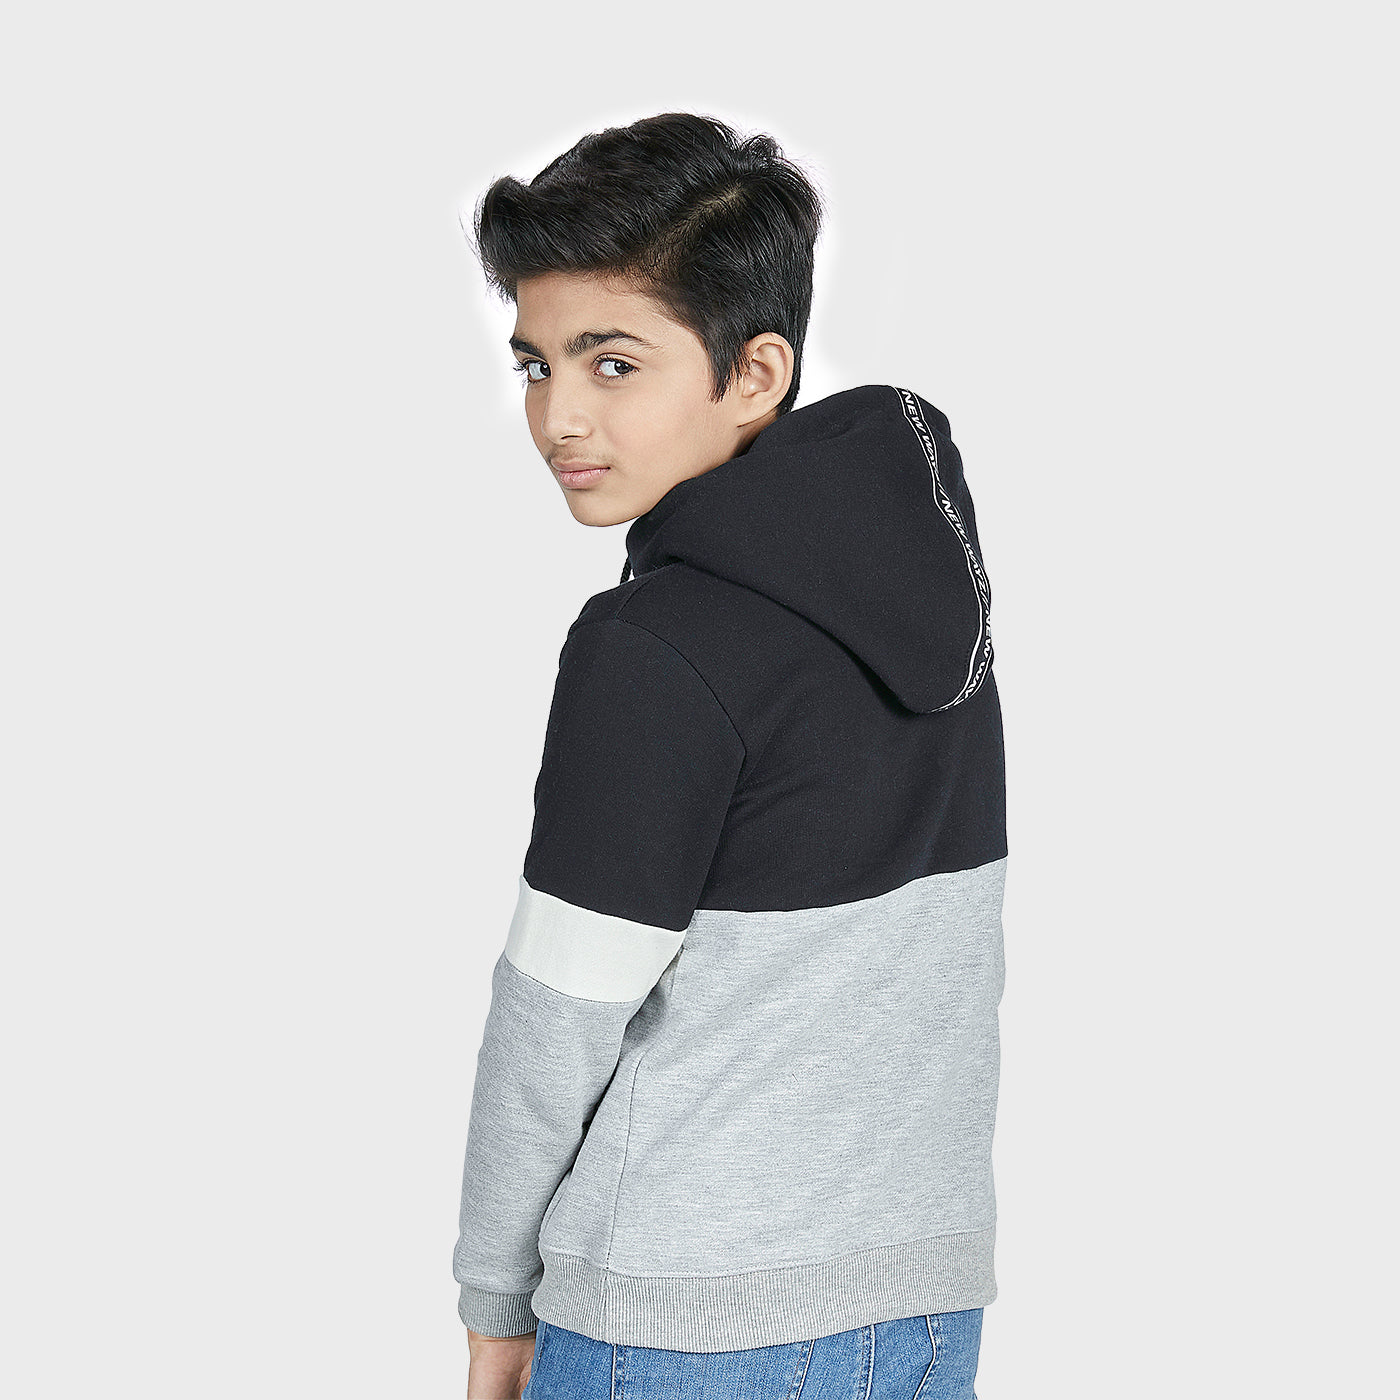 Best hoodies for boys in Pakistan